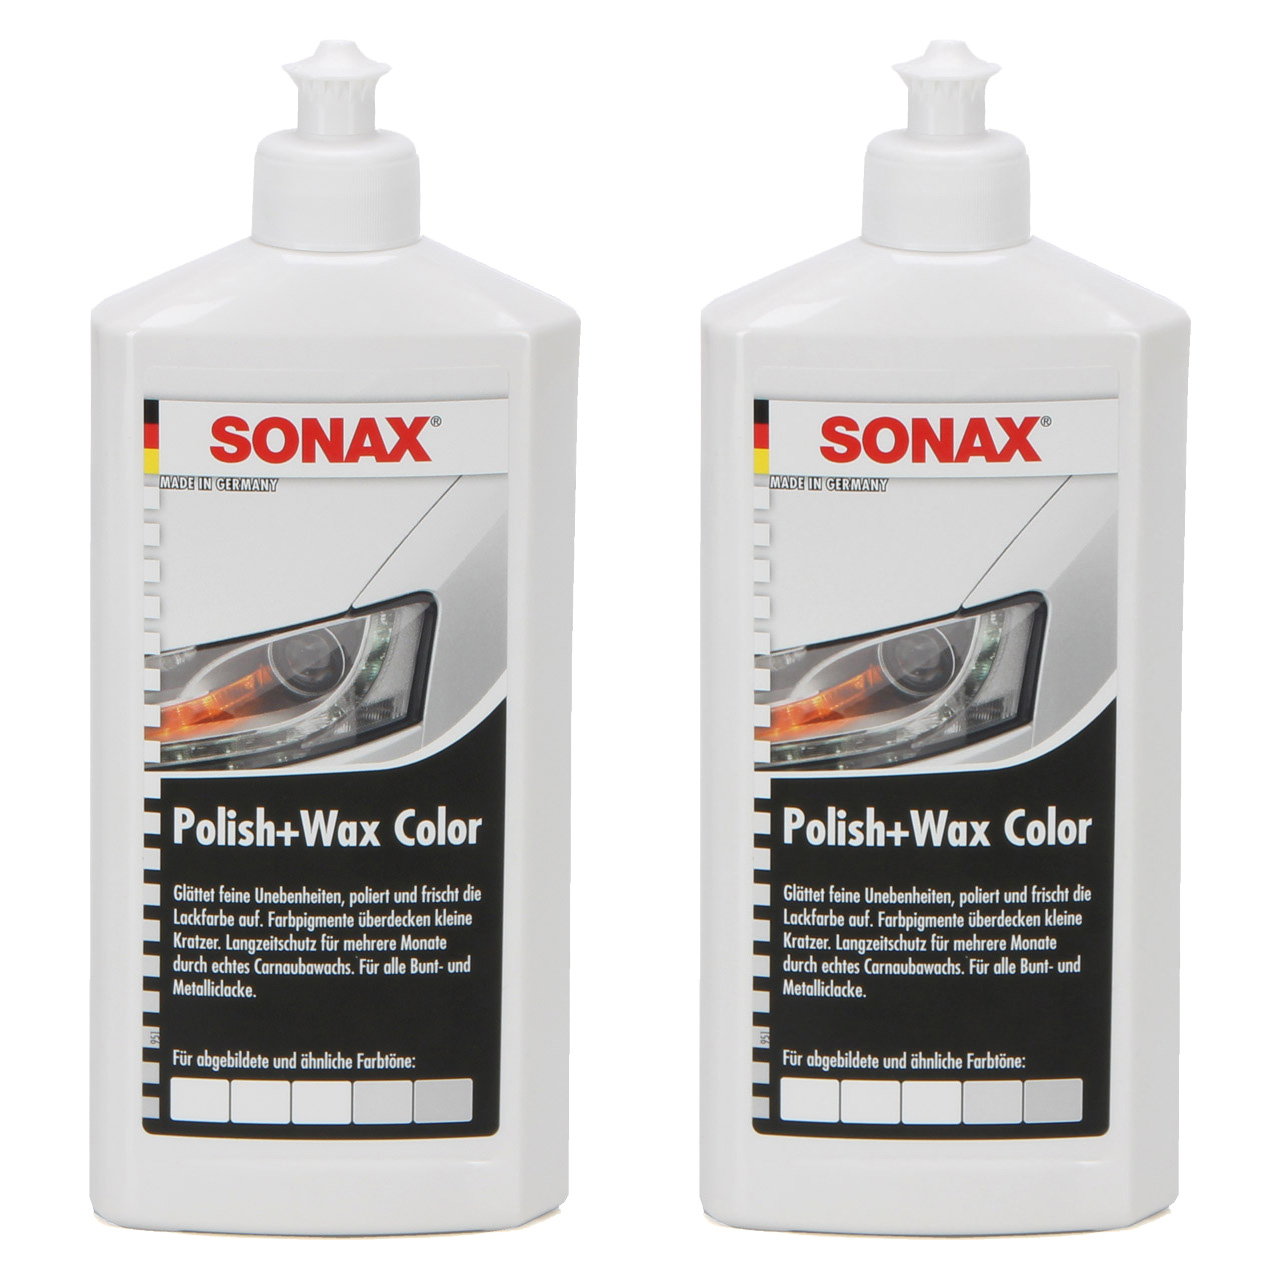 SONAX Polish and Wax Color red + polish Ball + Microfibercloth bu, 27,95 €